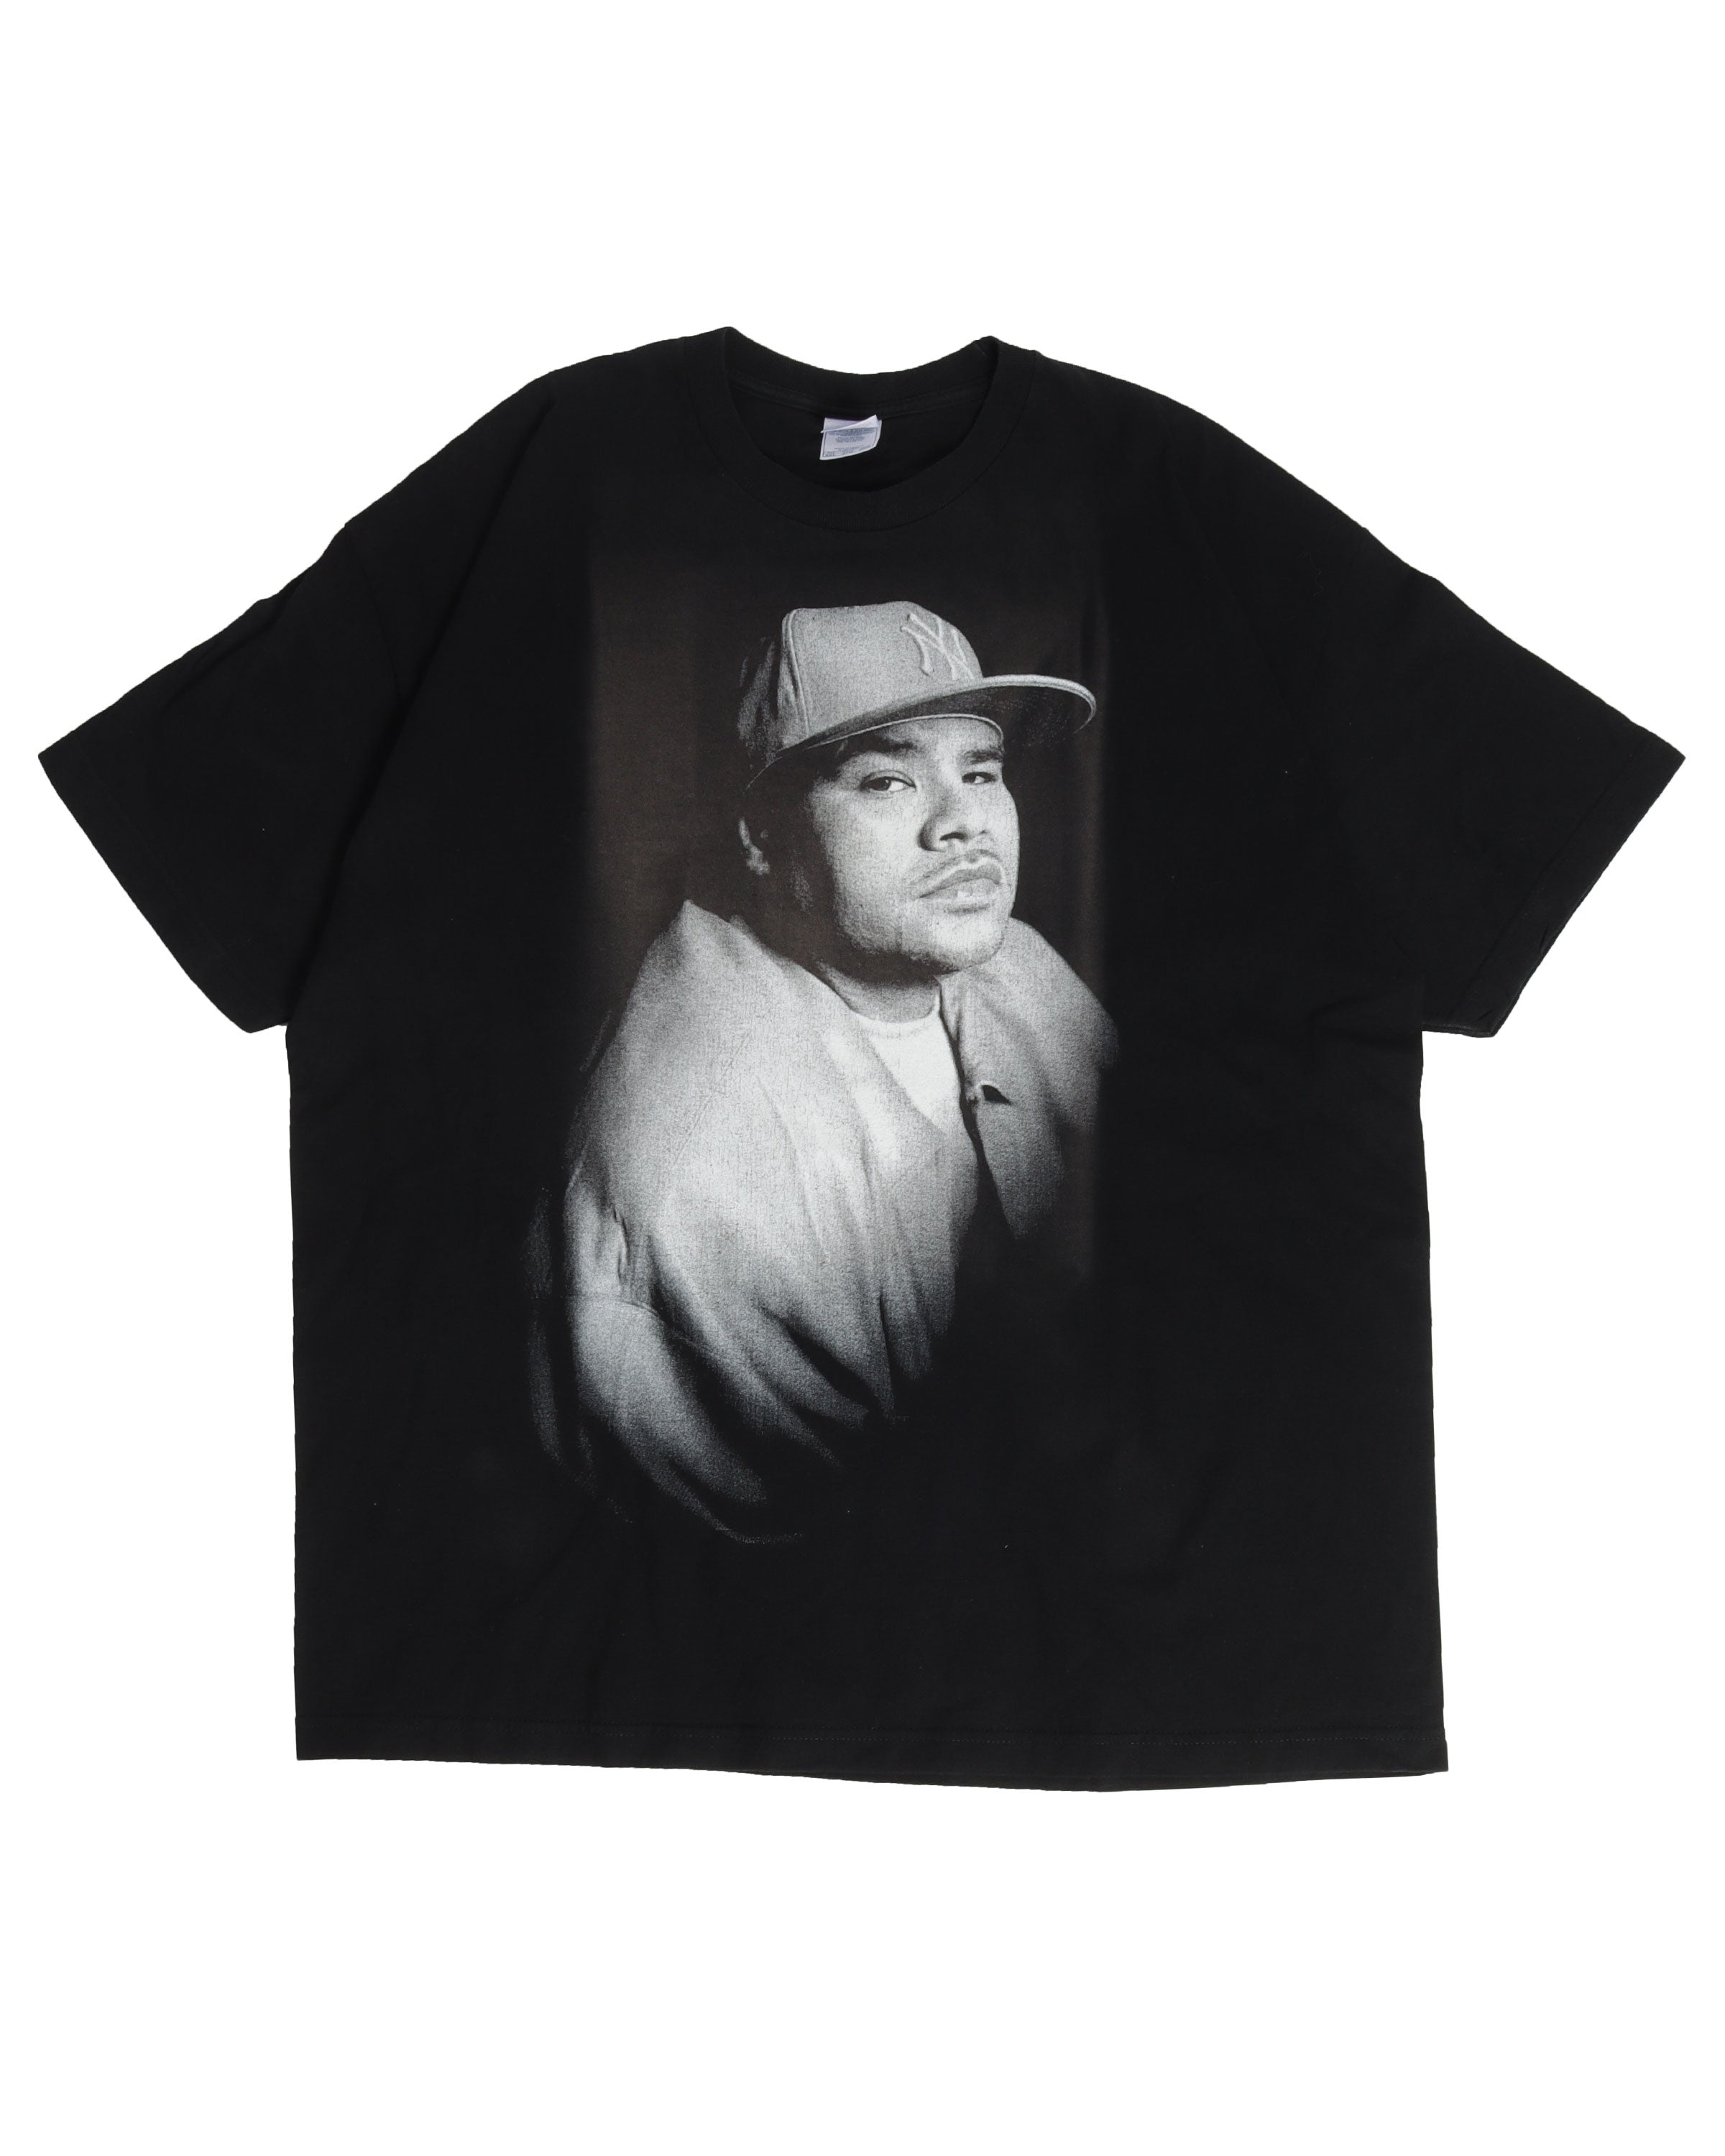 Fat Joe Portrait T-Shirt